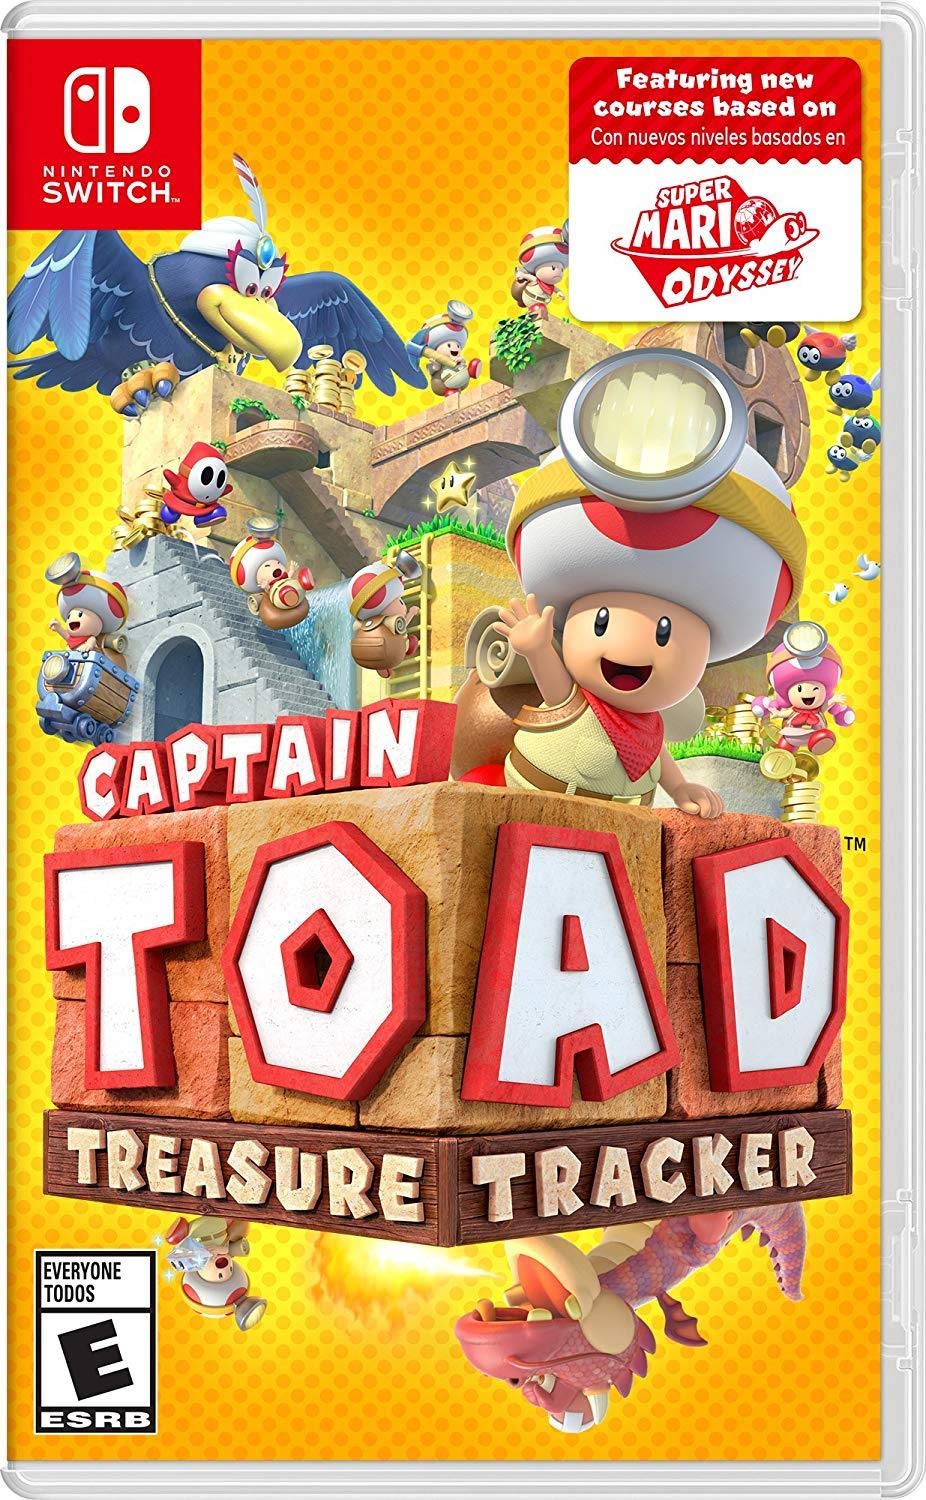 Captain Toad Treasure Tracker game cover artwork.